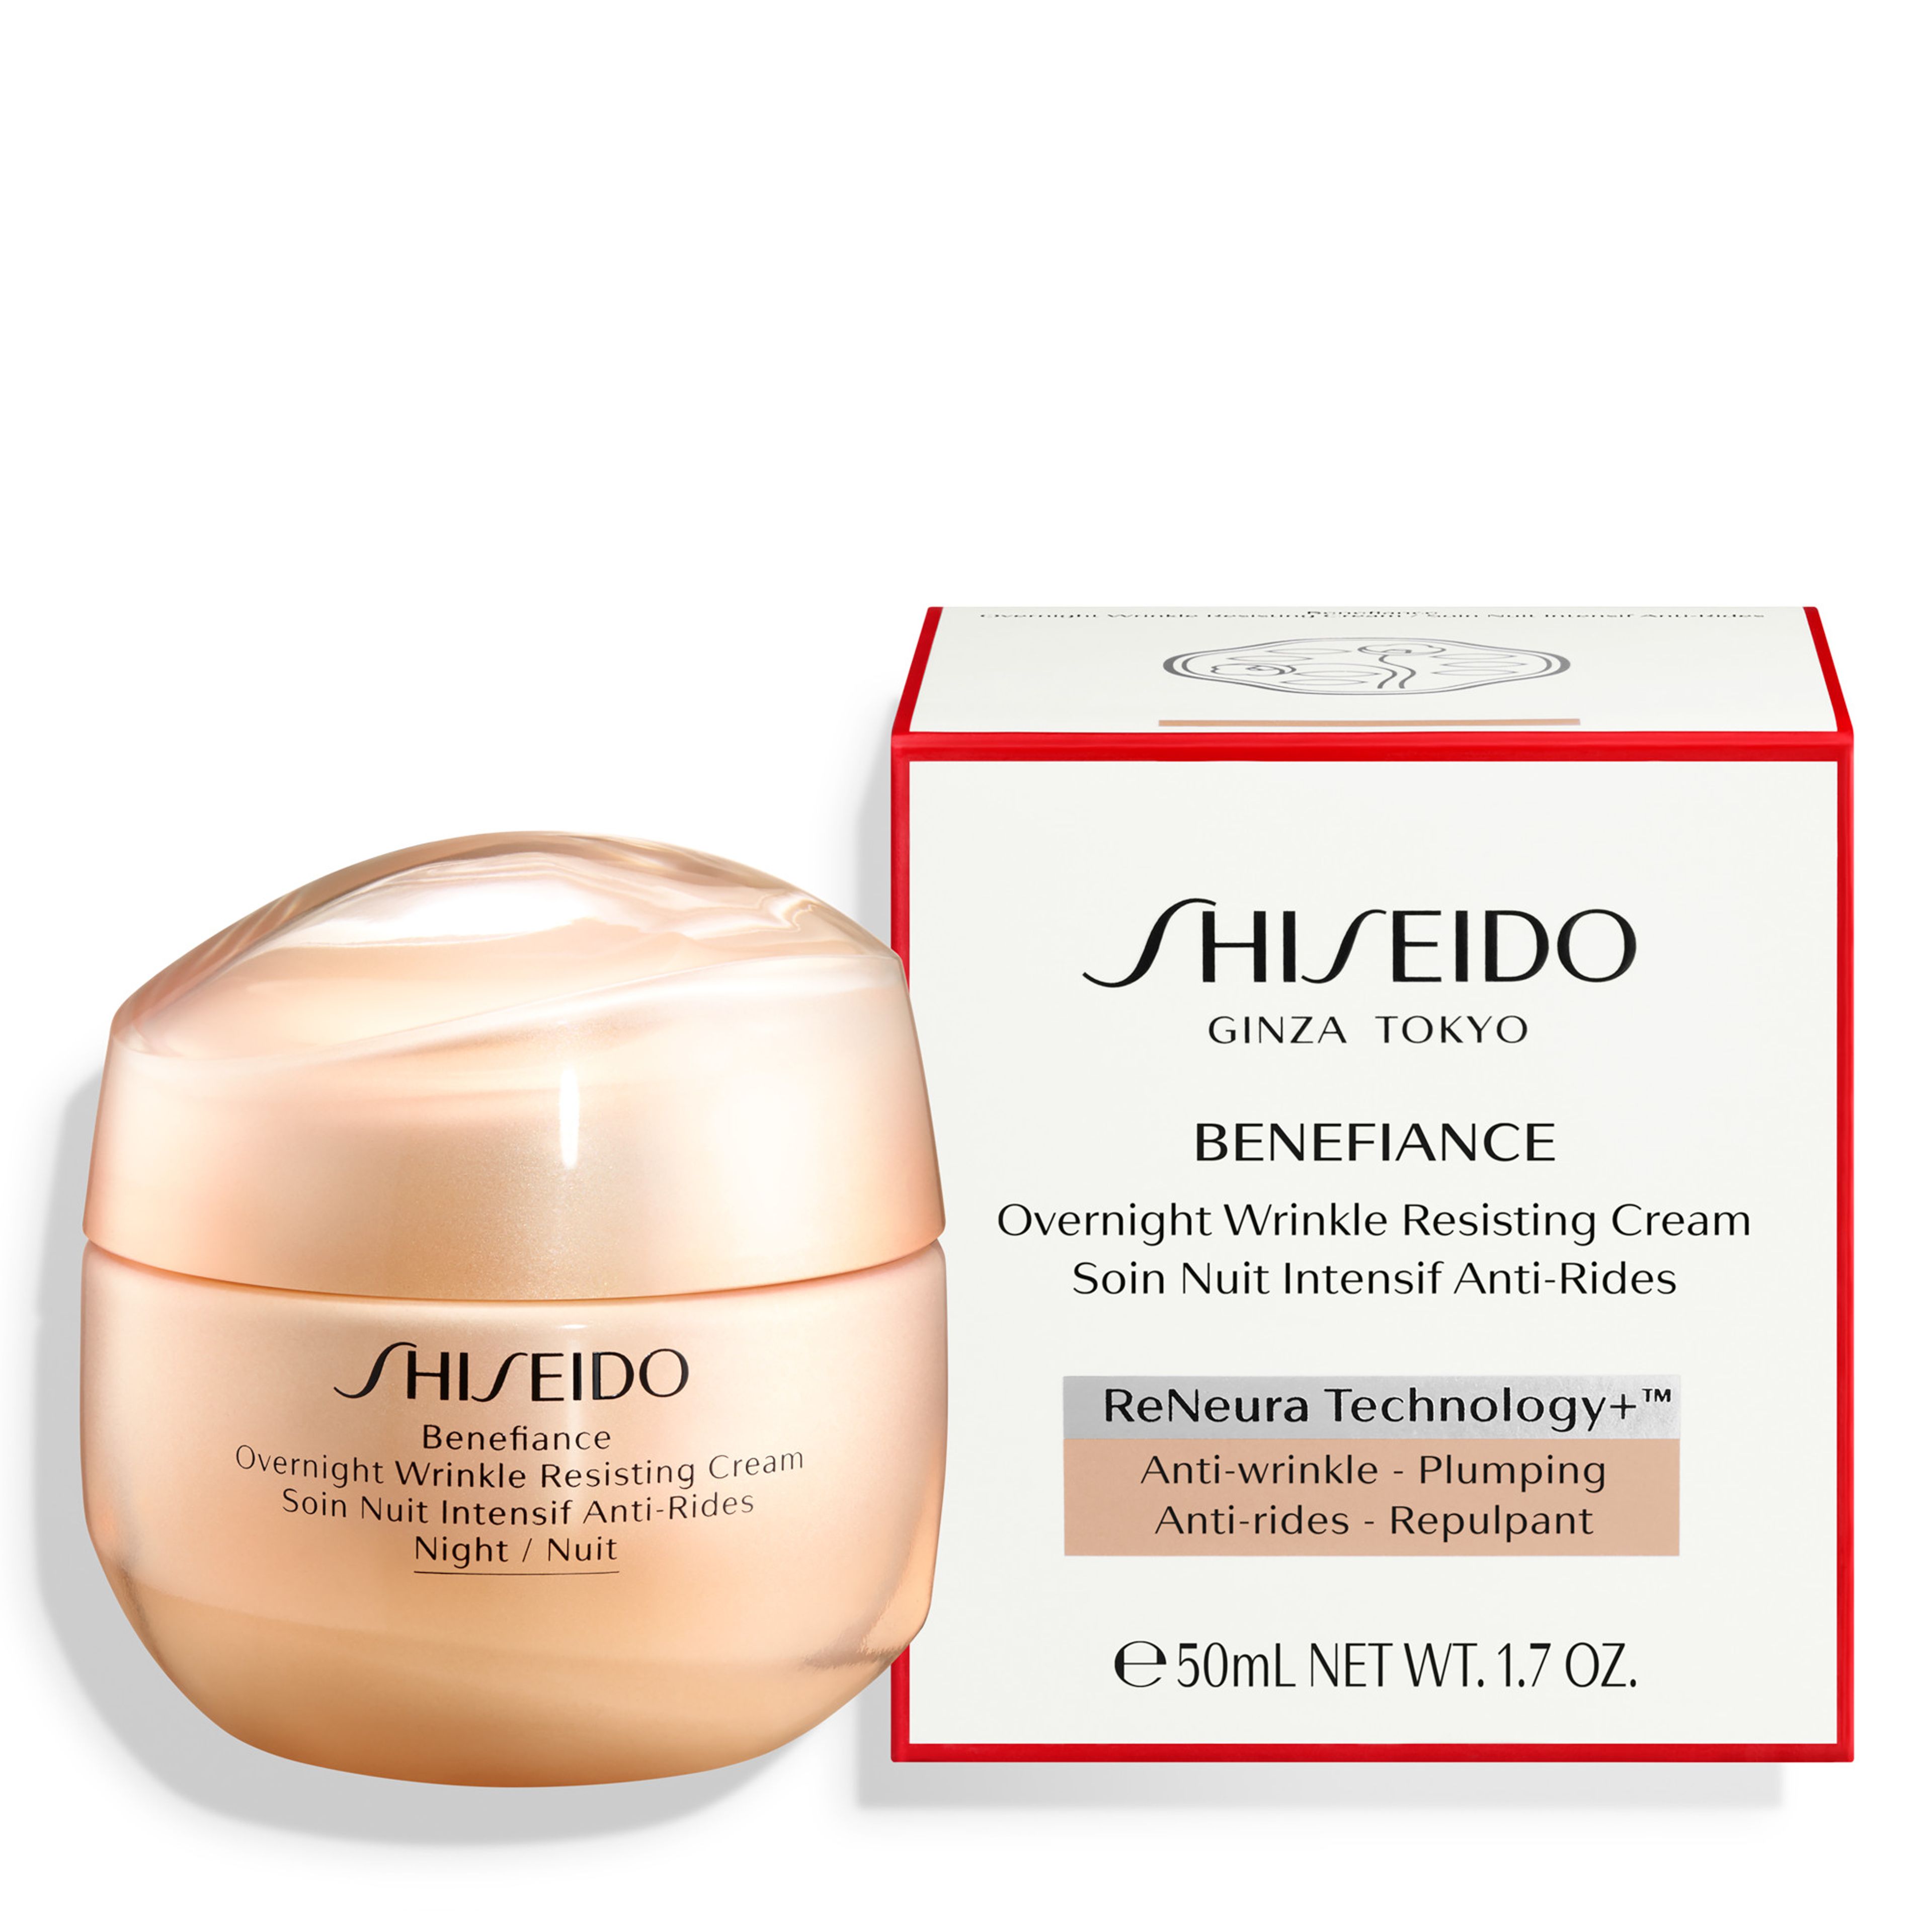 Shiseido Overnight Wrinkle Resisting Cream 6